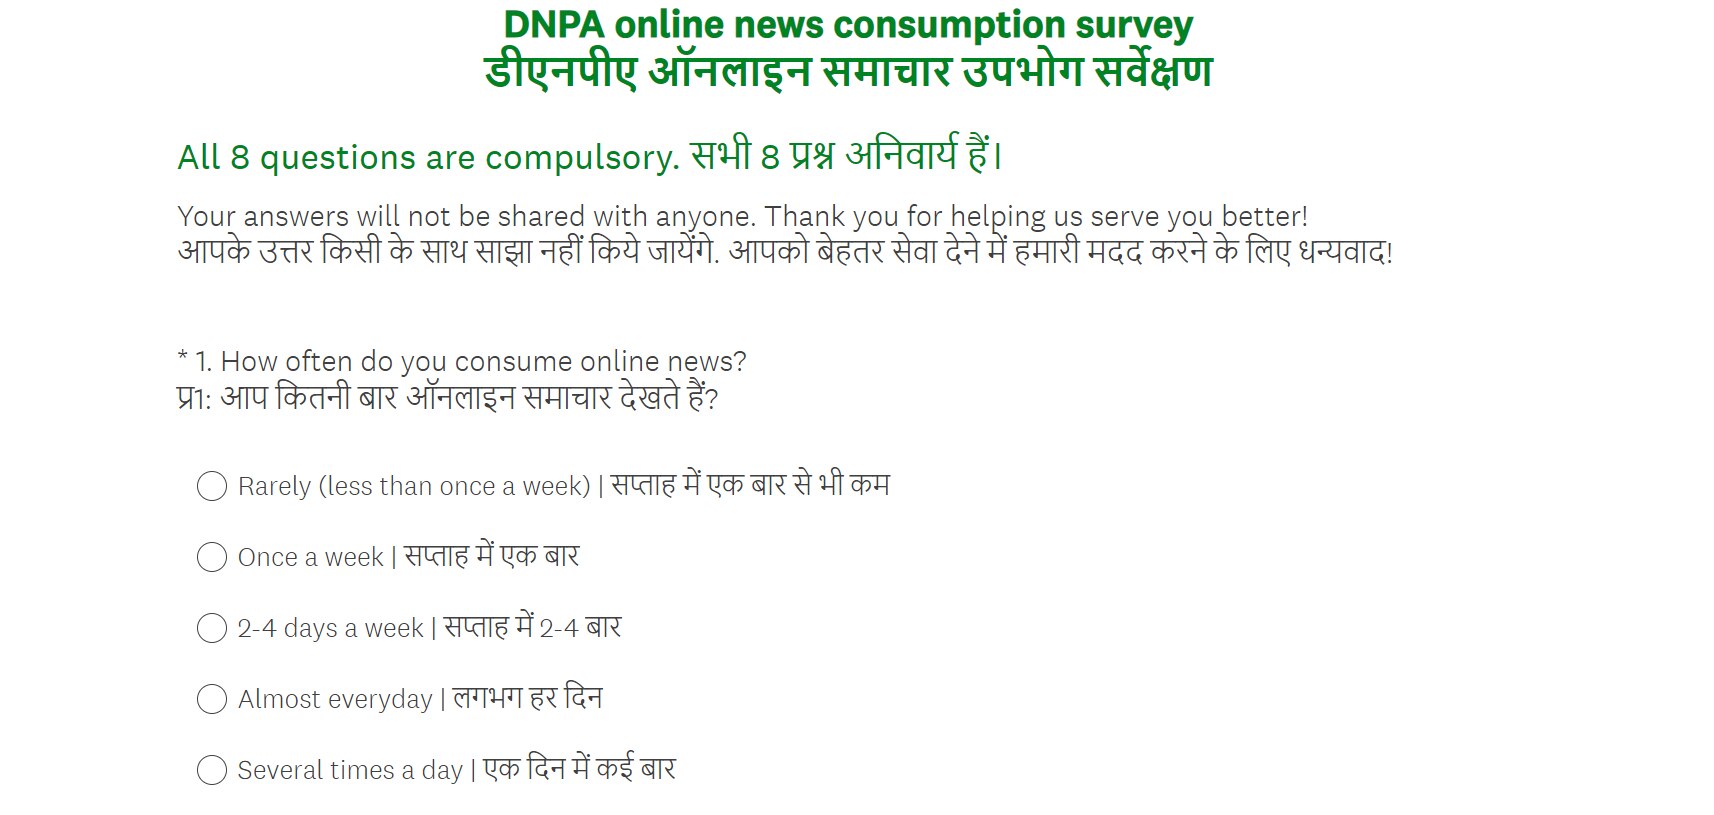 Evolution Of News Consumption Patterns — Take DNPA Survey To Enhance Digital News Serving